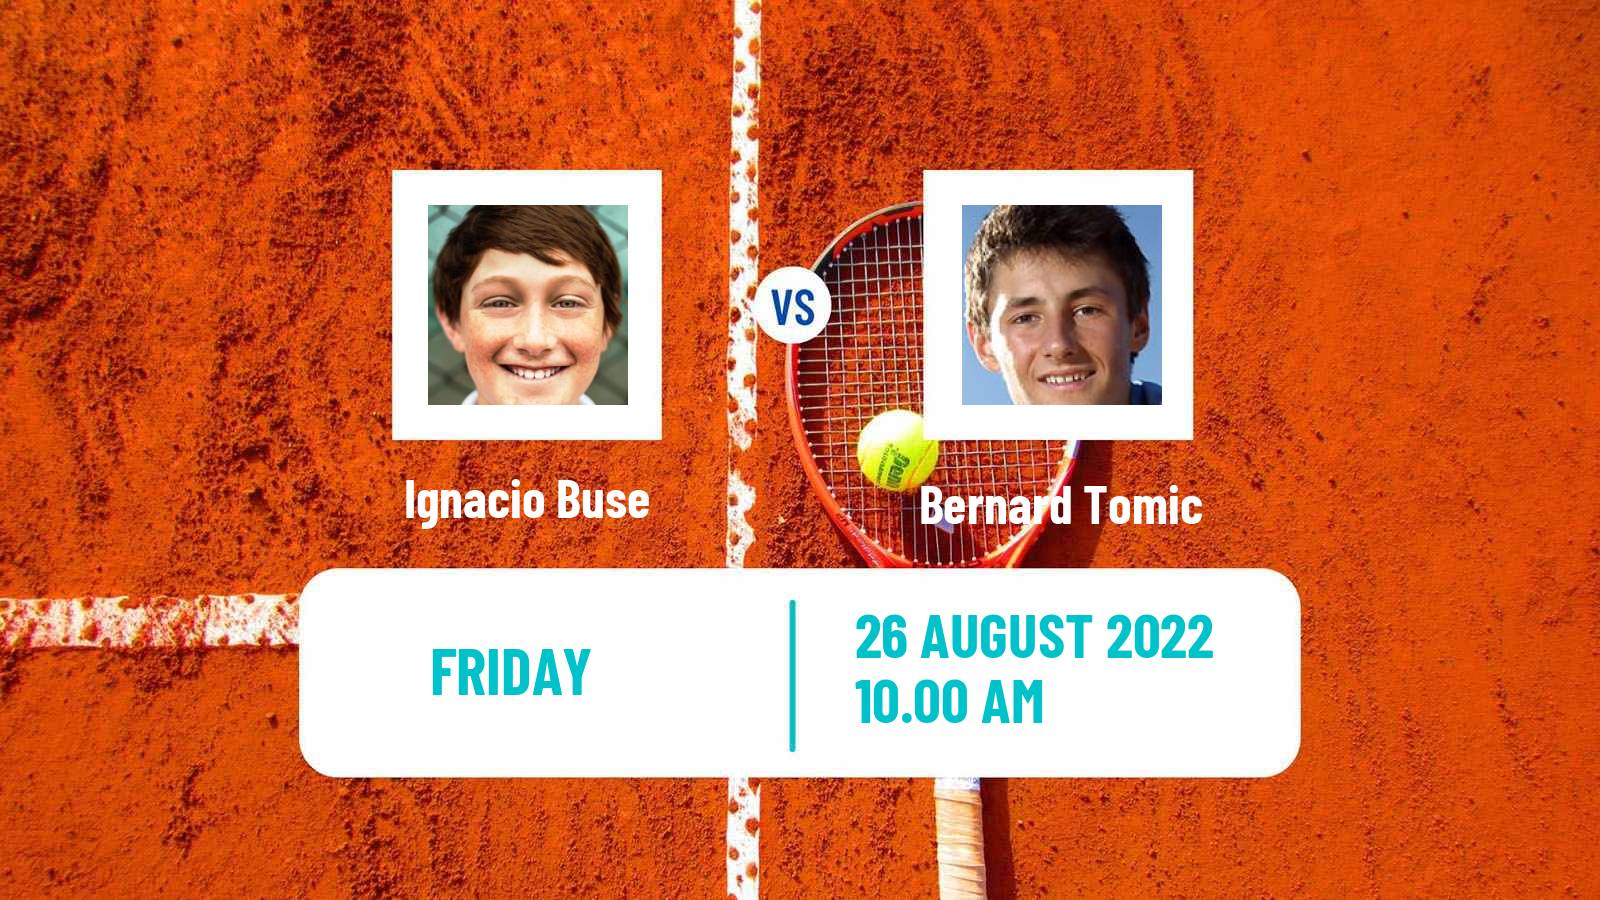 Tennis ITF Tournaments Ignacio Buse - Bernard Tomic